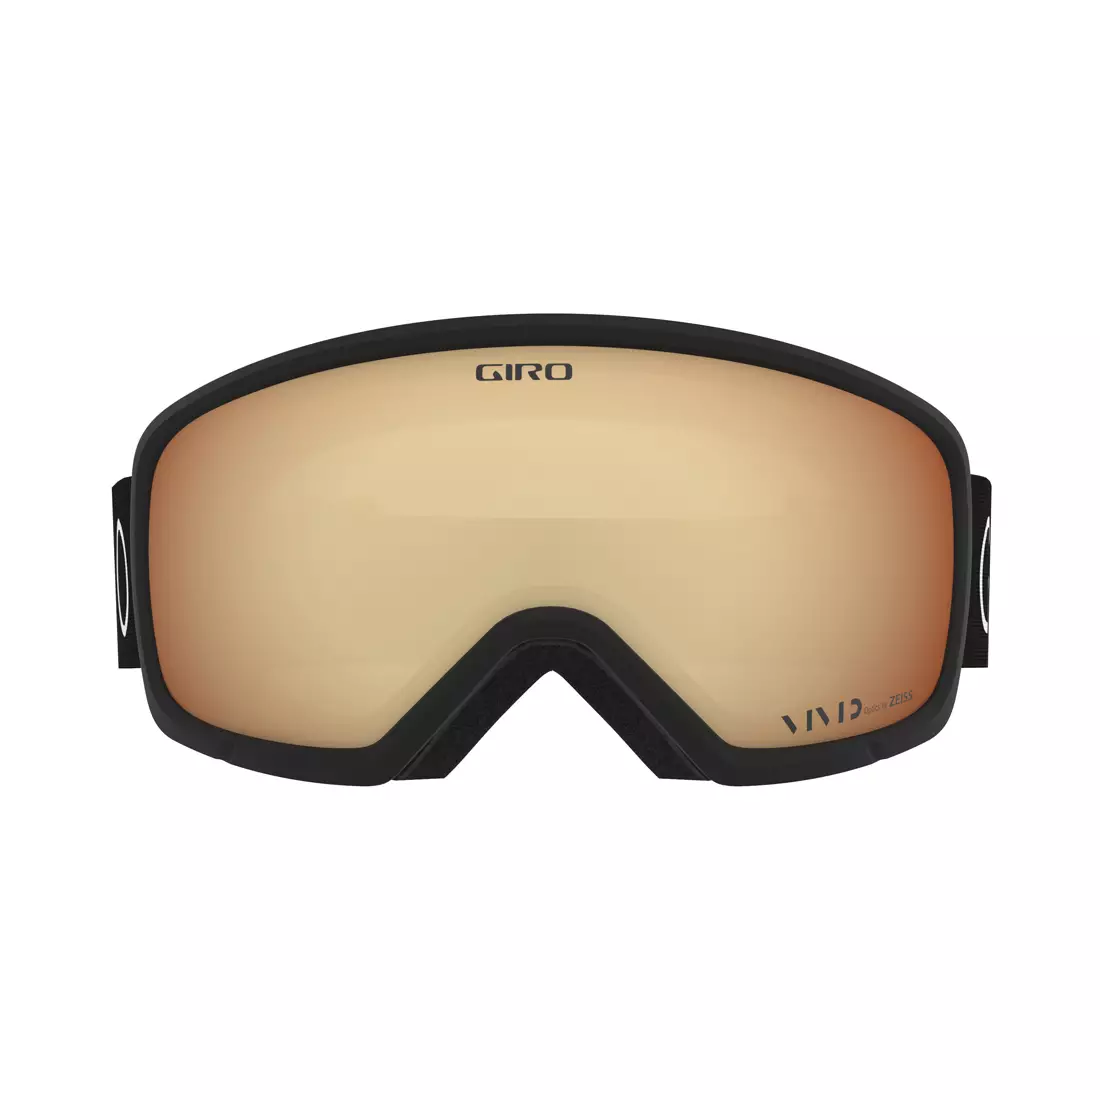 GIRO dámske zimné lyžiarske/snowboardové okuliare millie black core light (VIVID COPPER 21% S2 zorník) GR-7119830